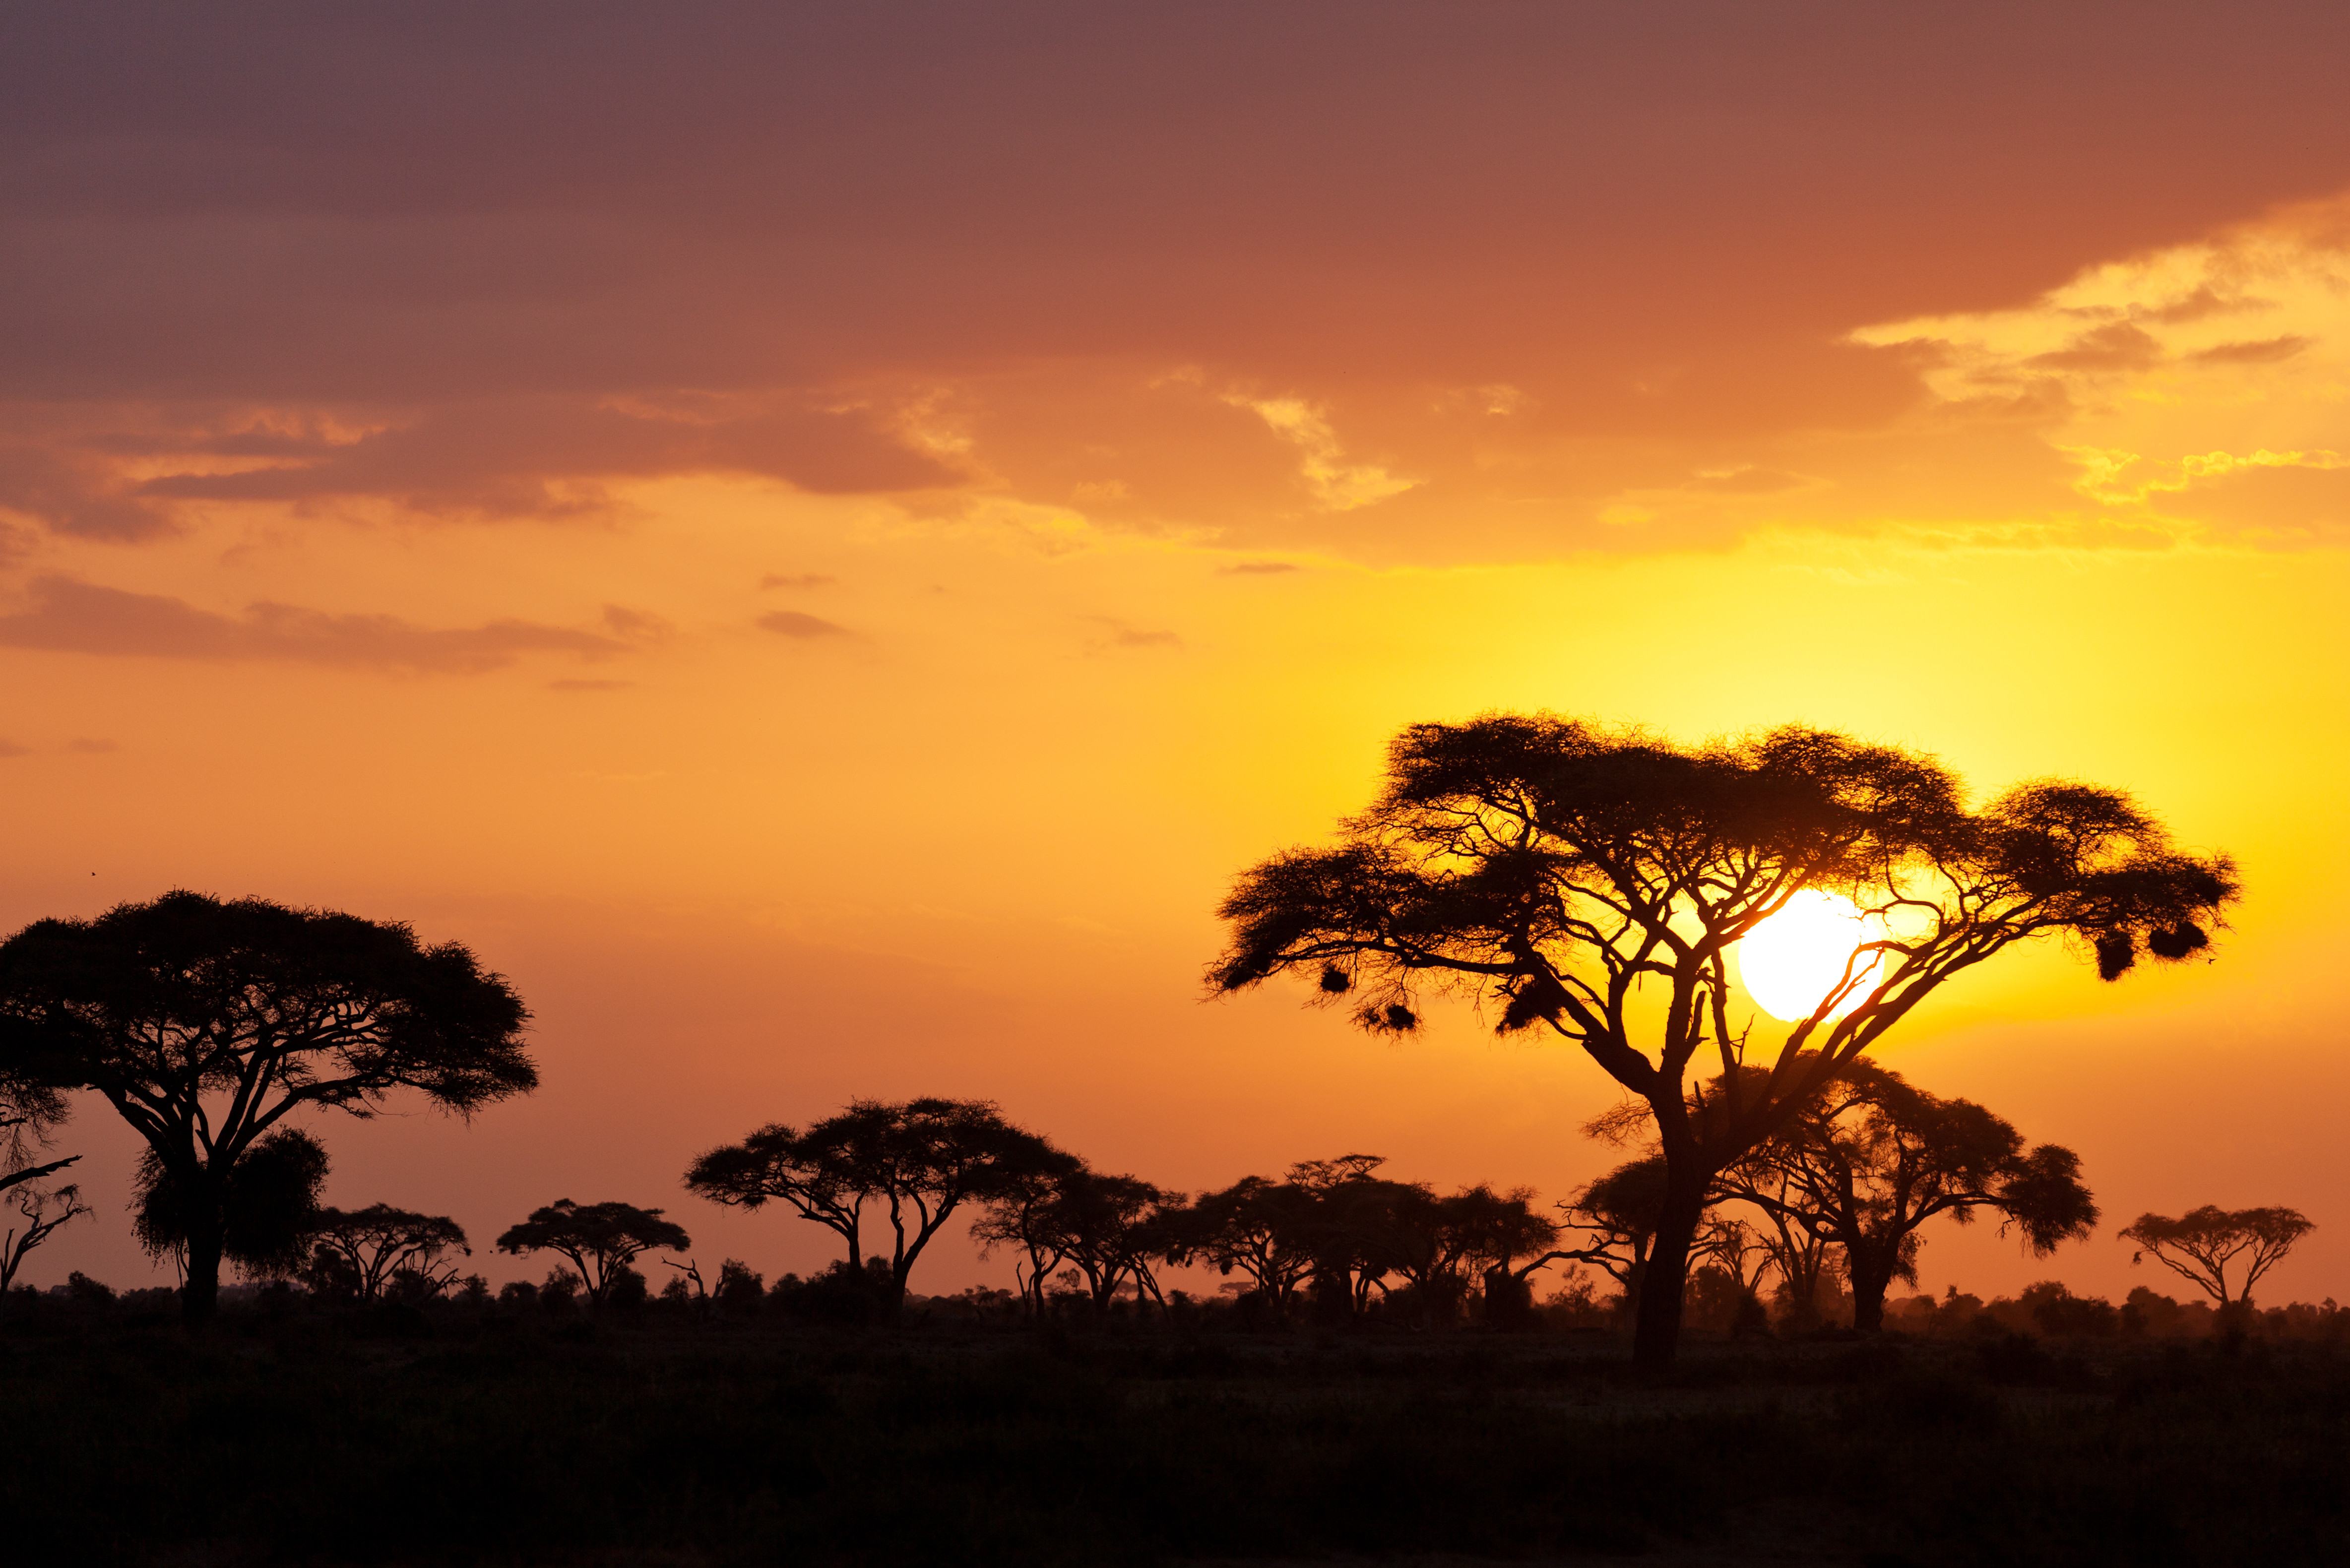 kenia-safari-rondreis-safari-kenia-highlights-14-dagen-333travel